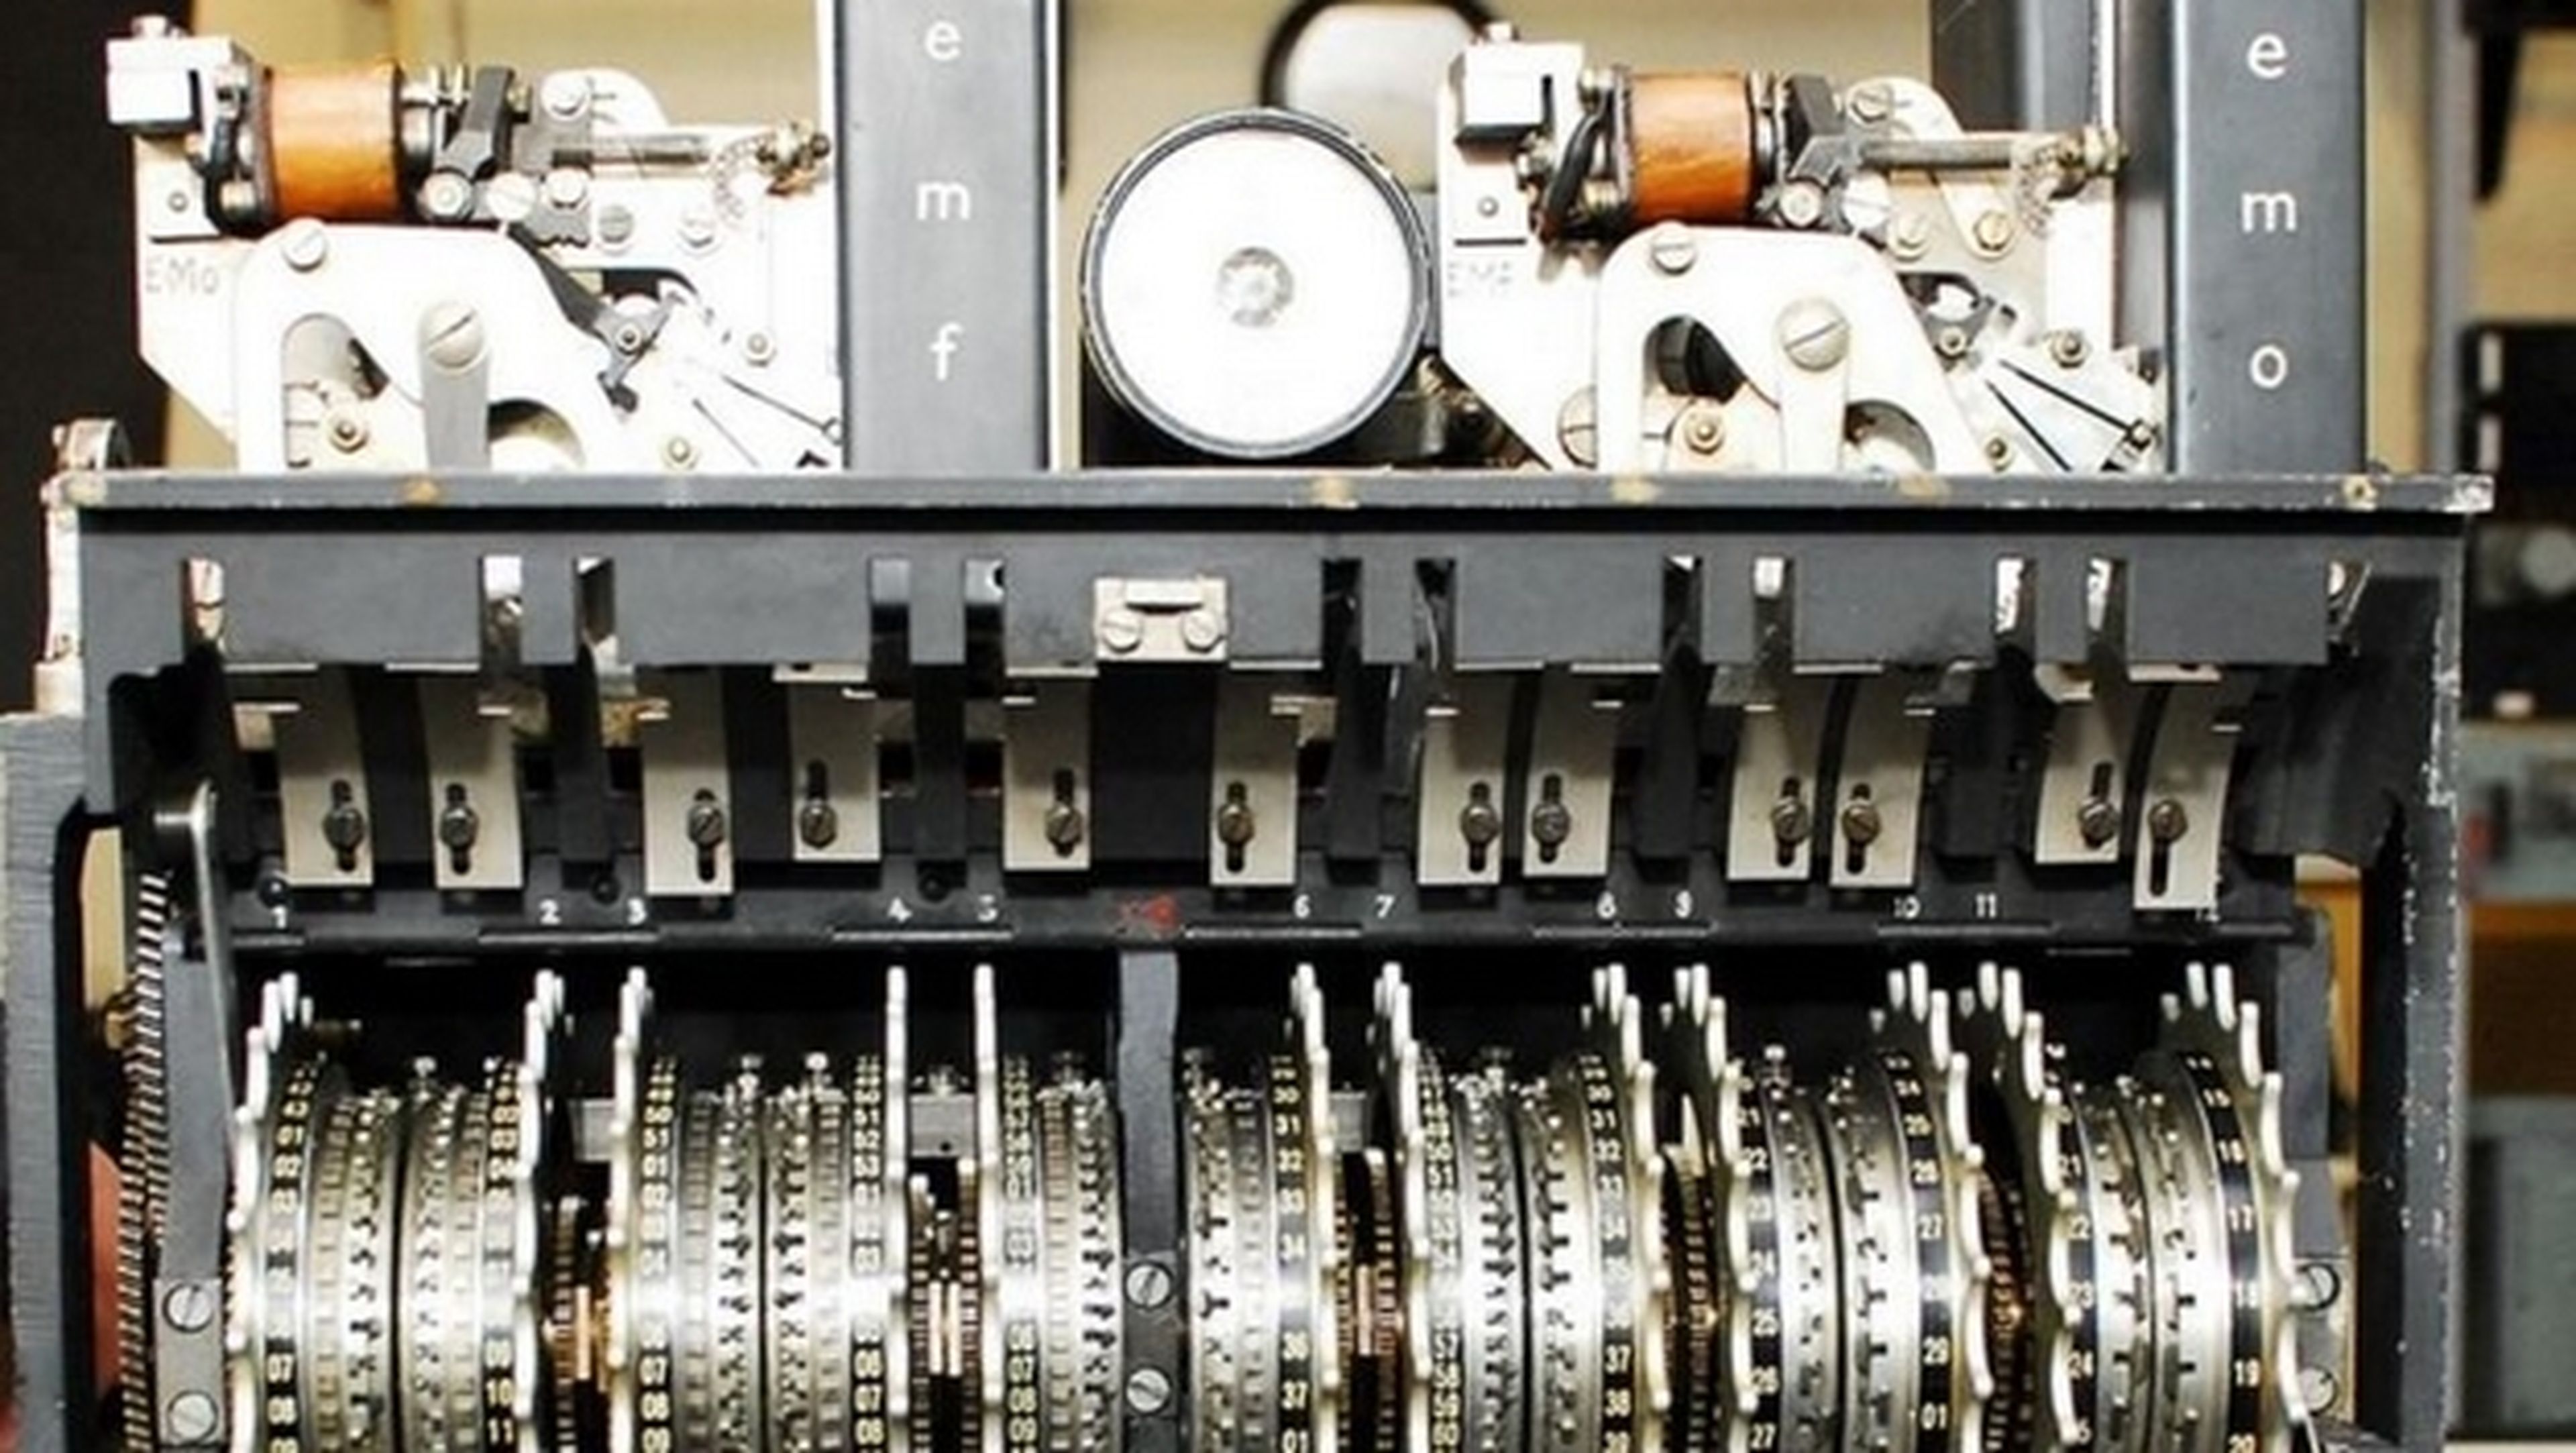 Máquina de encriptación de los nazis, vendida por 12 euros en eBay